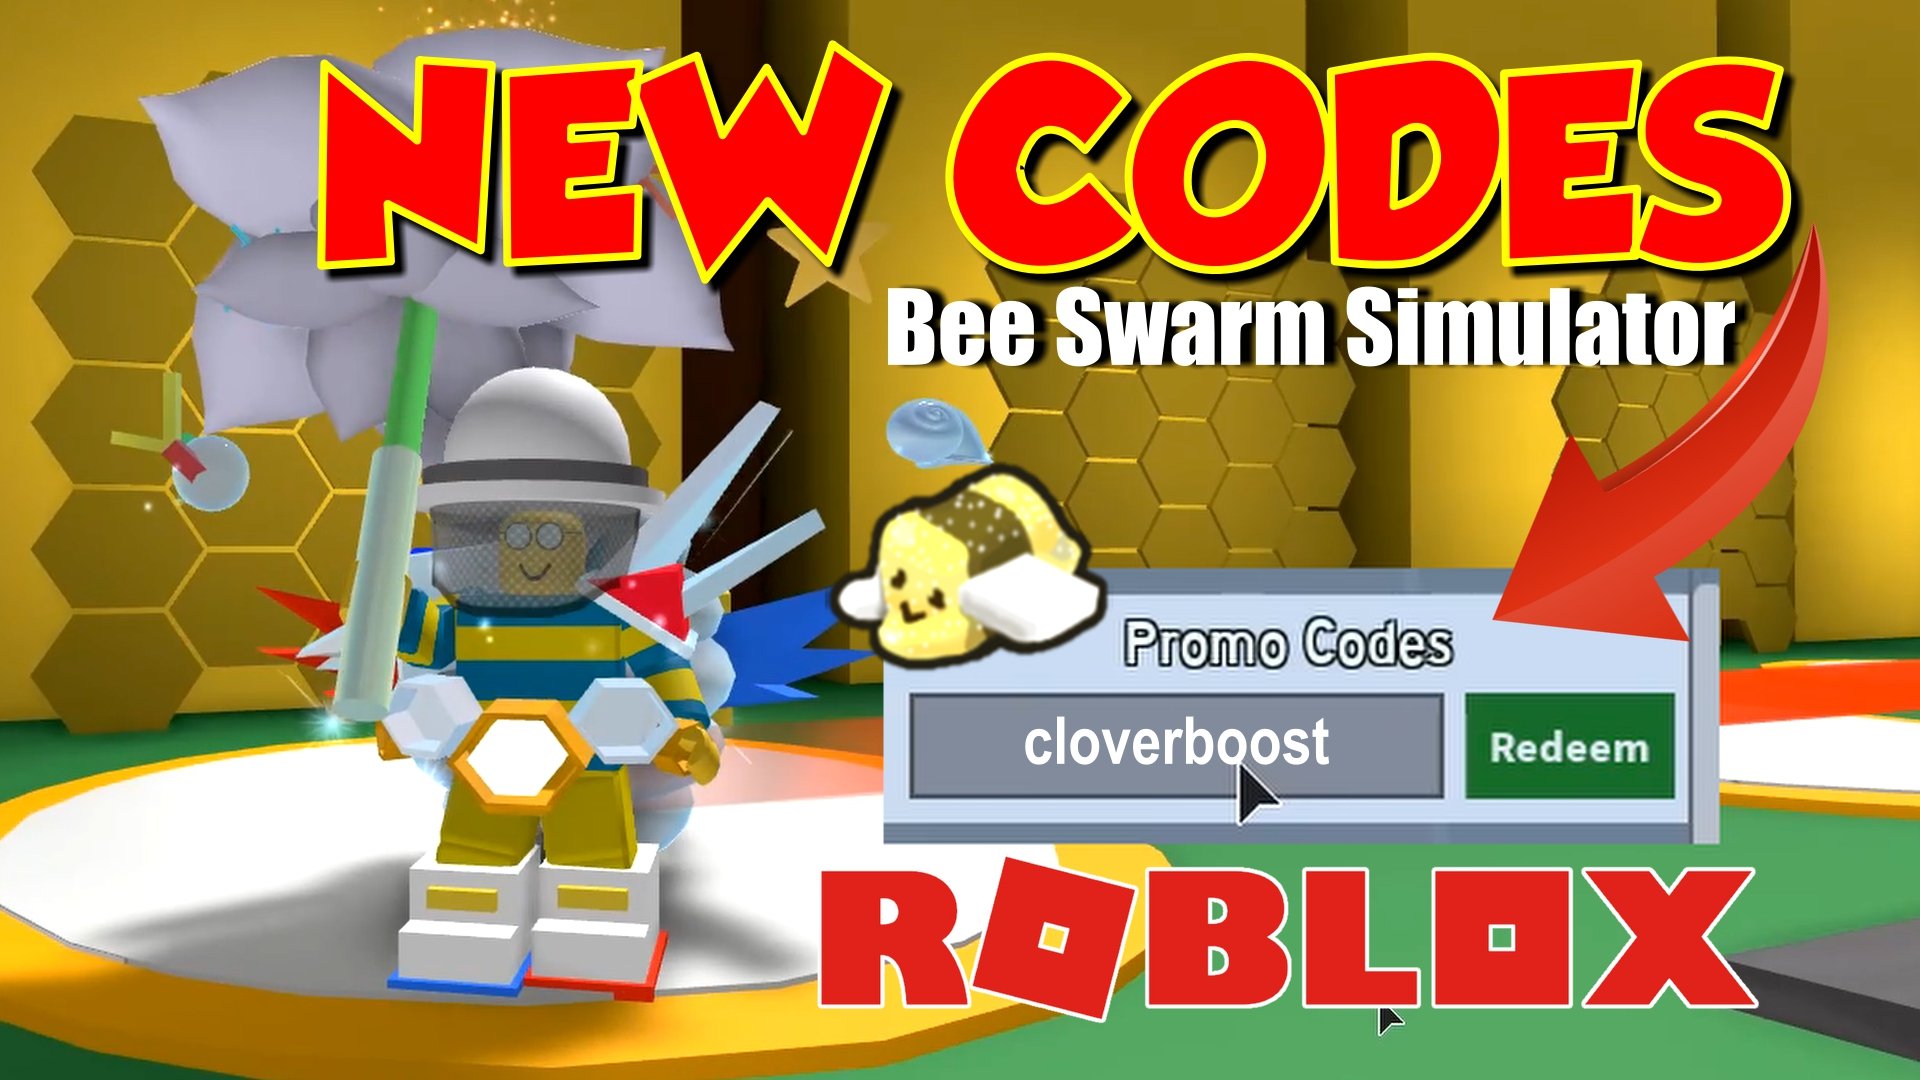 Bee swarm simulator codes 2021